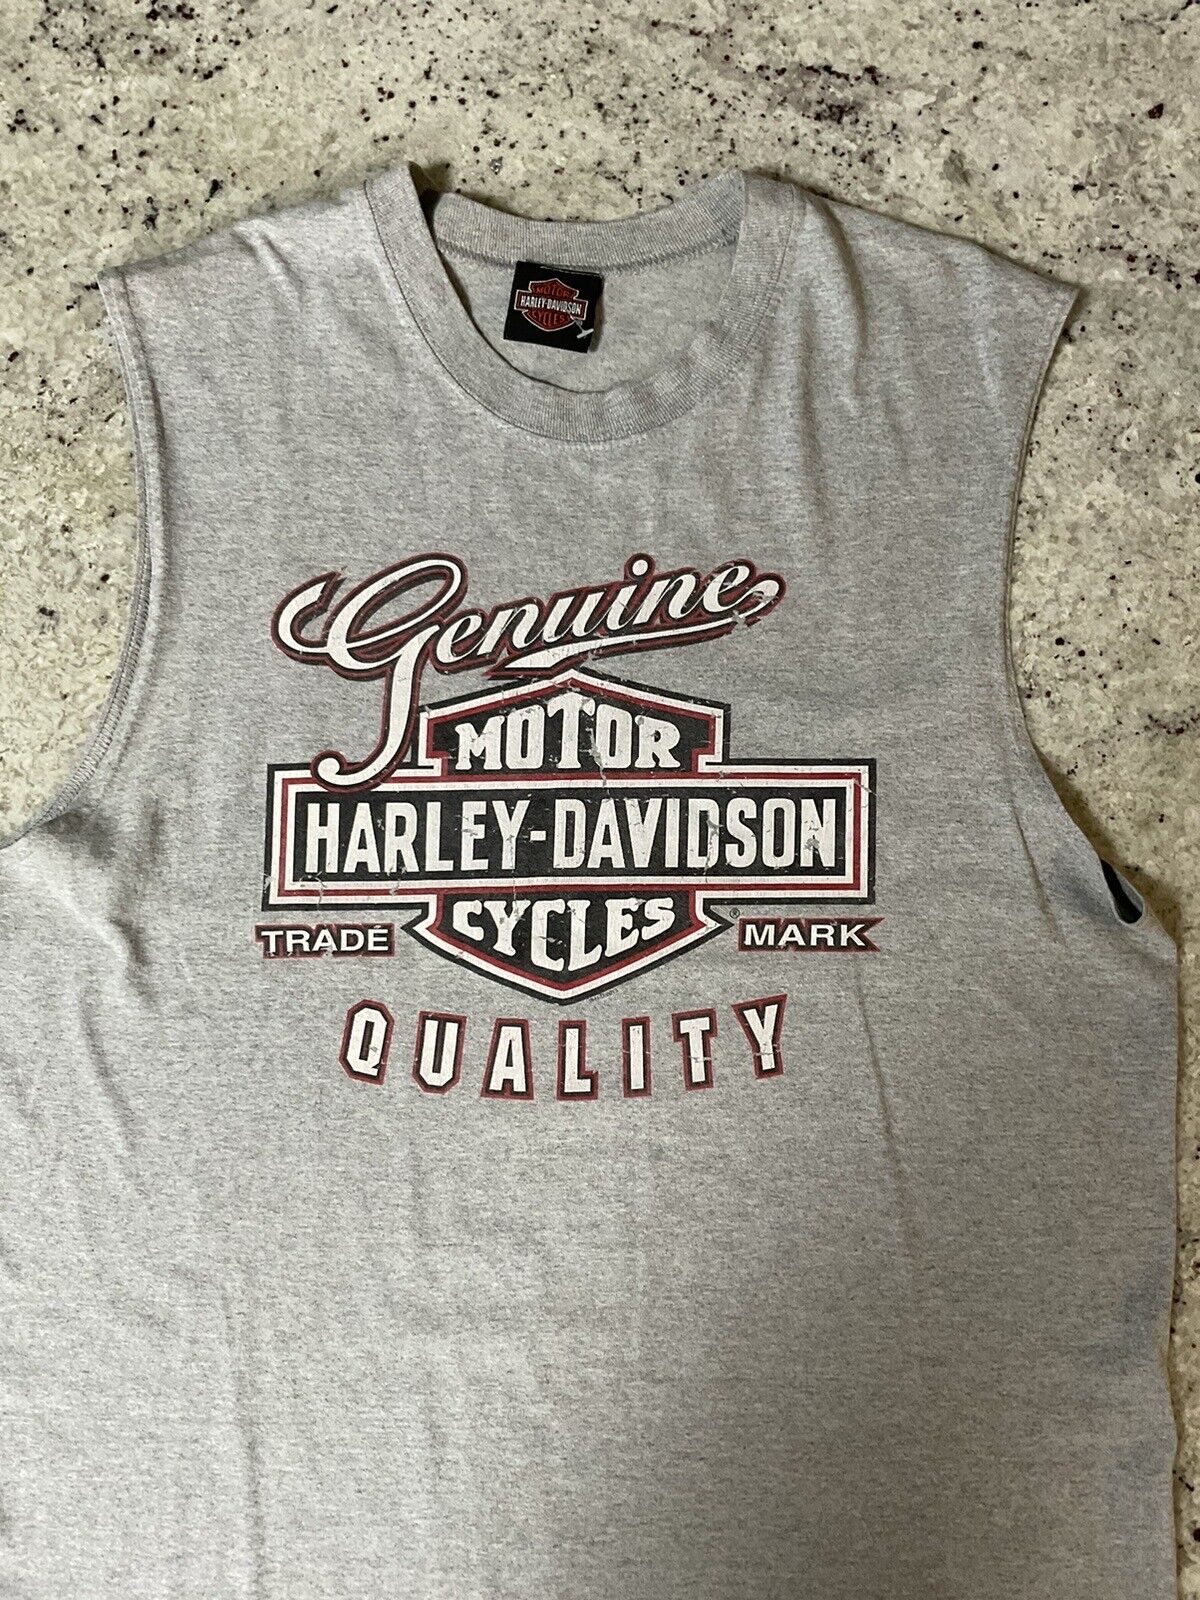 Harley-Davidson Men’s XL TEES No Sleeve genuine quality trademark